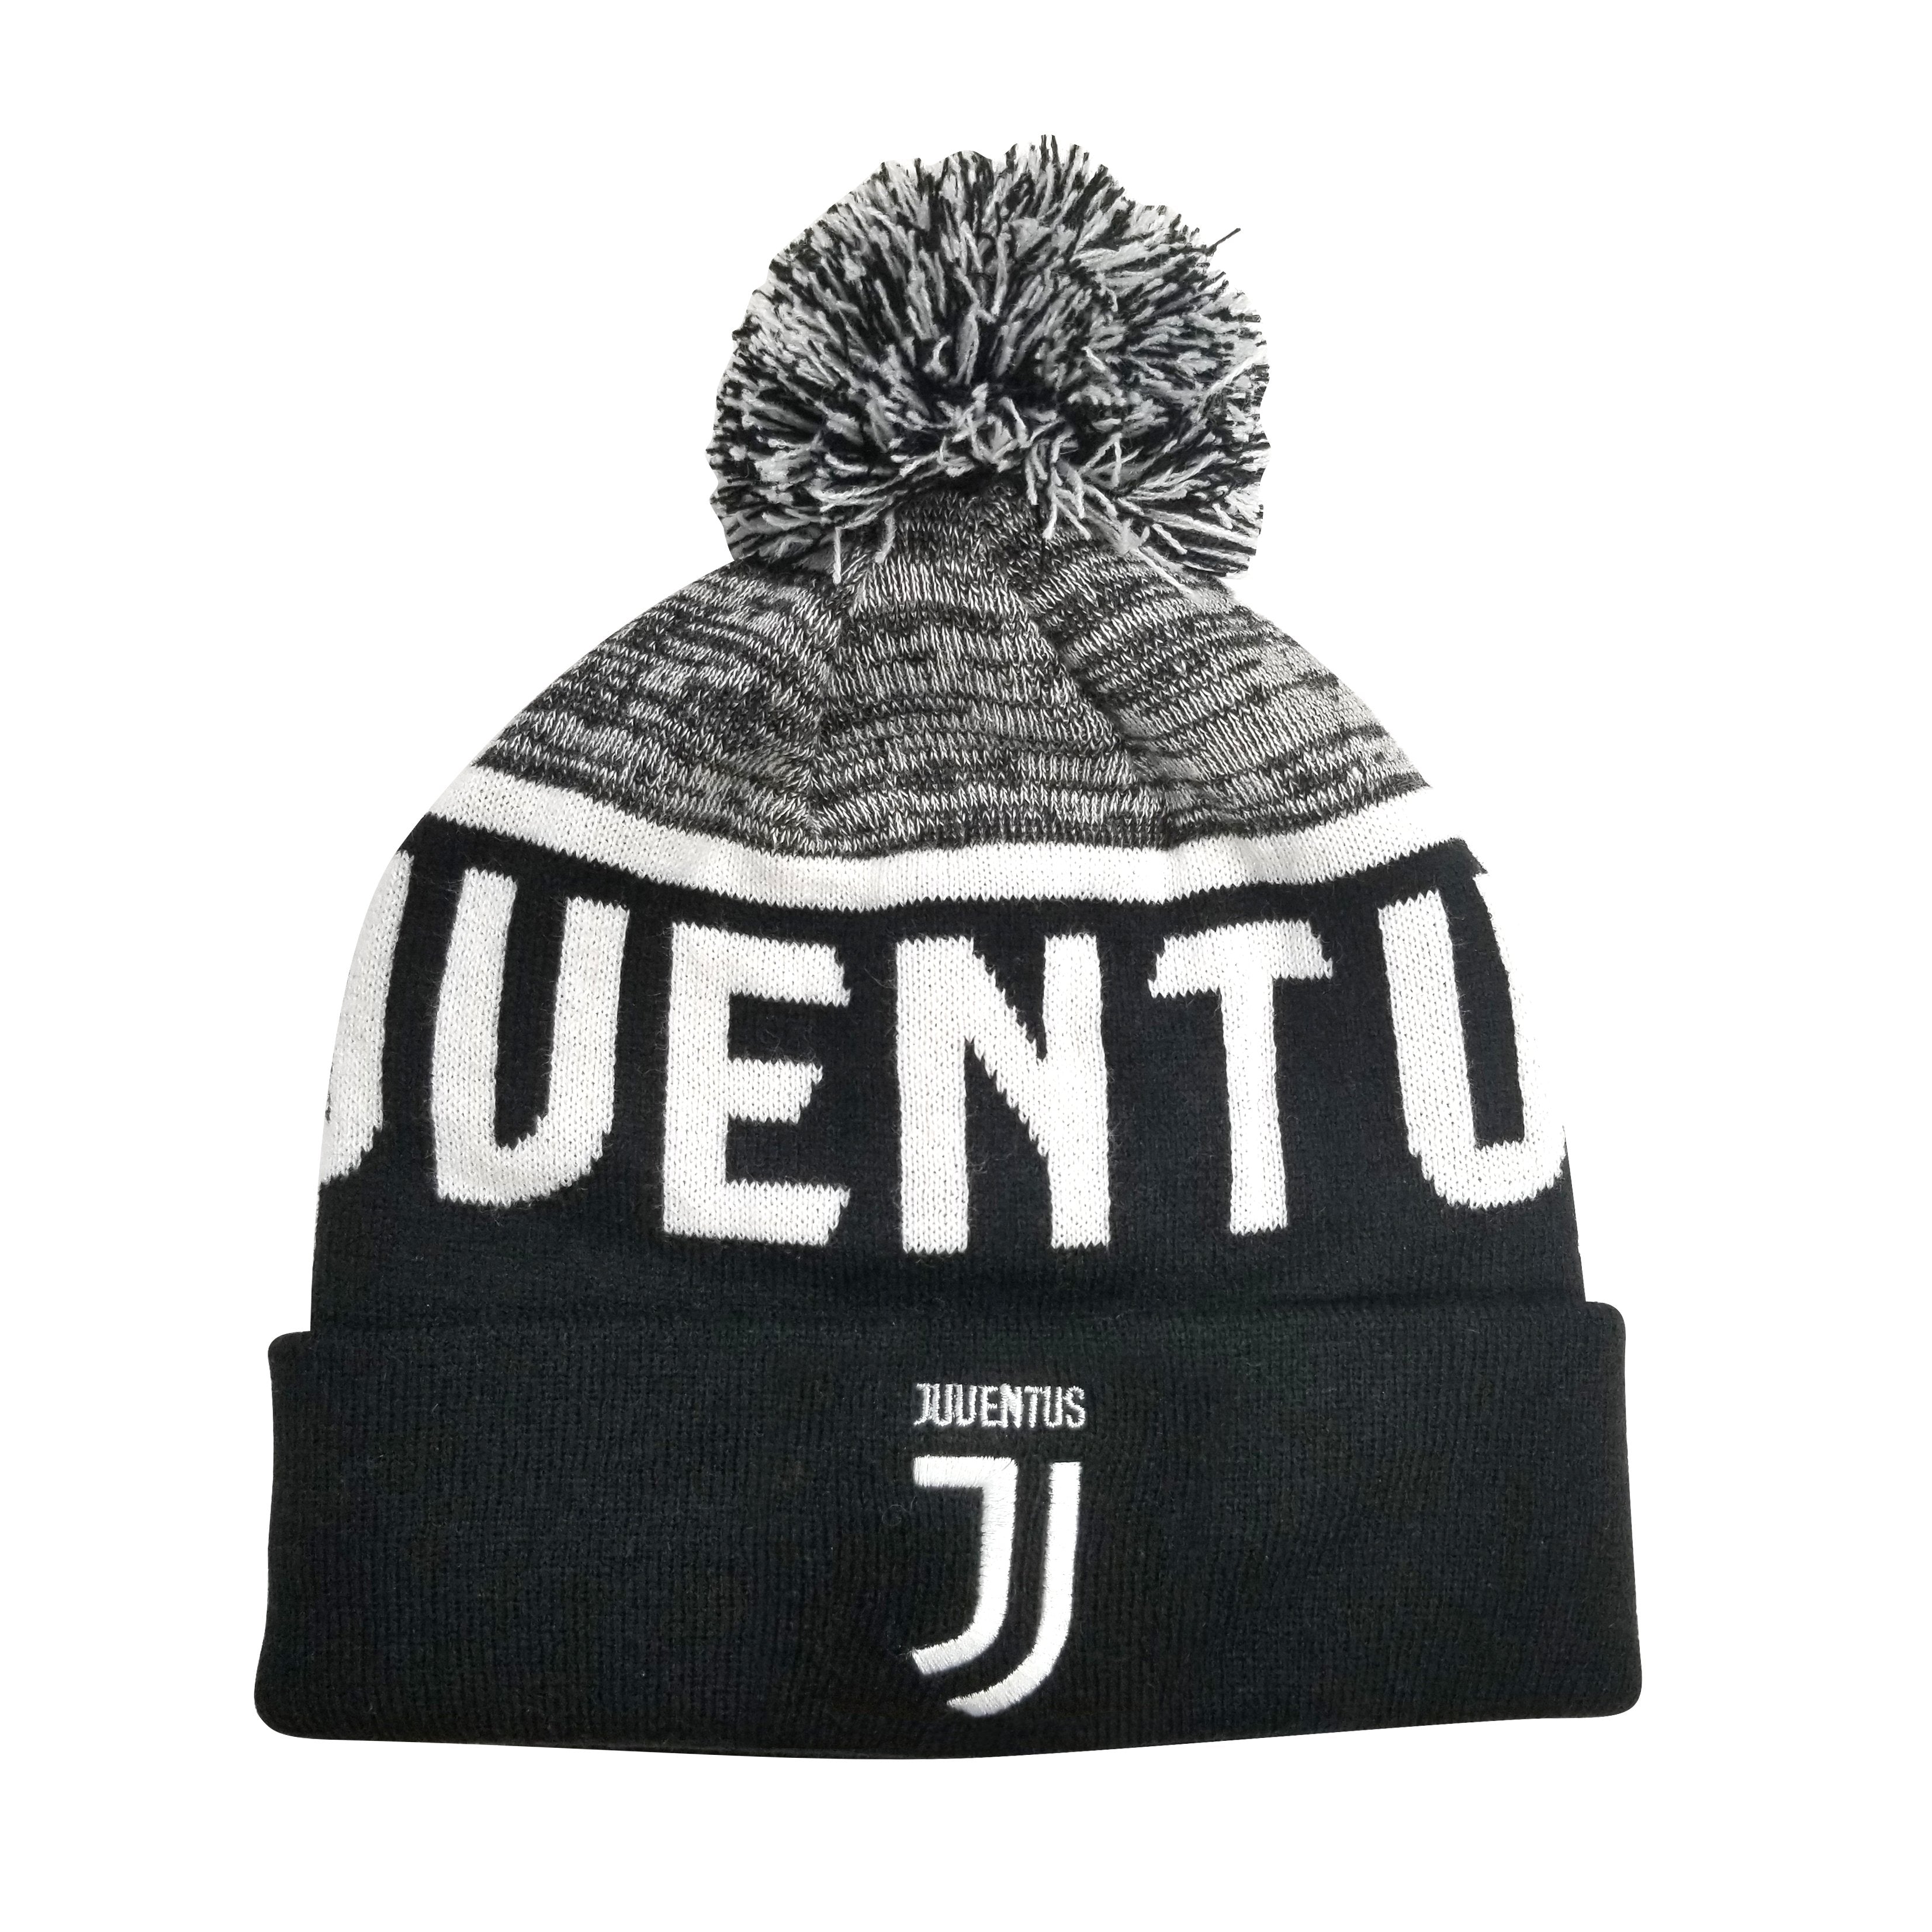 Black Beanie Juventus